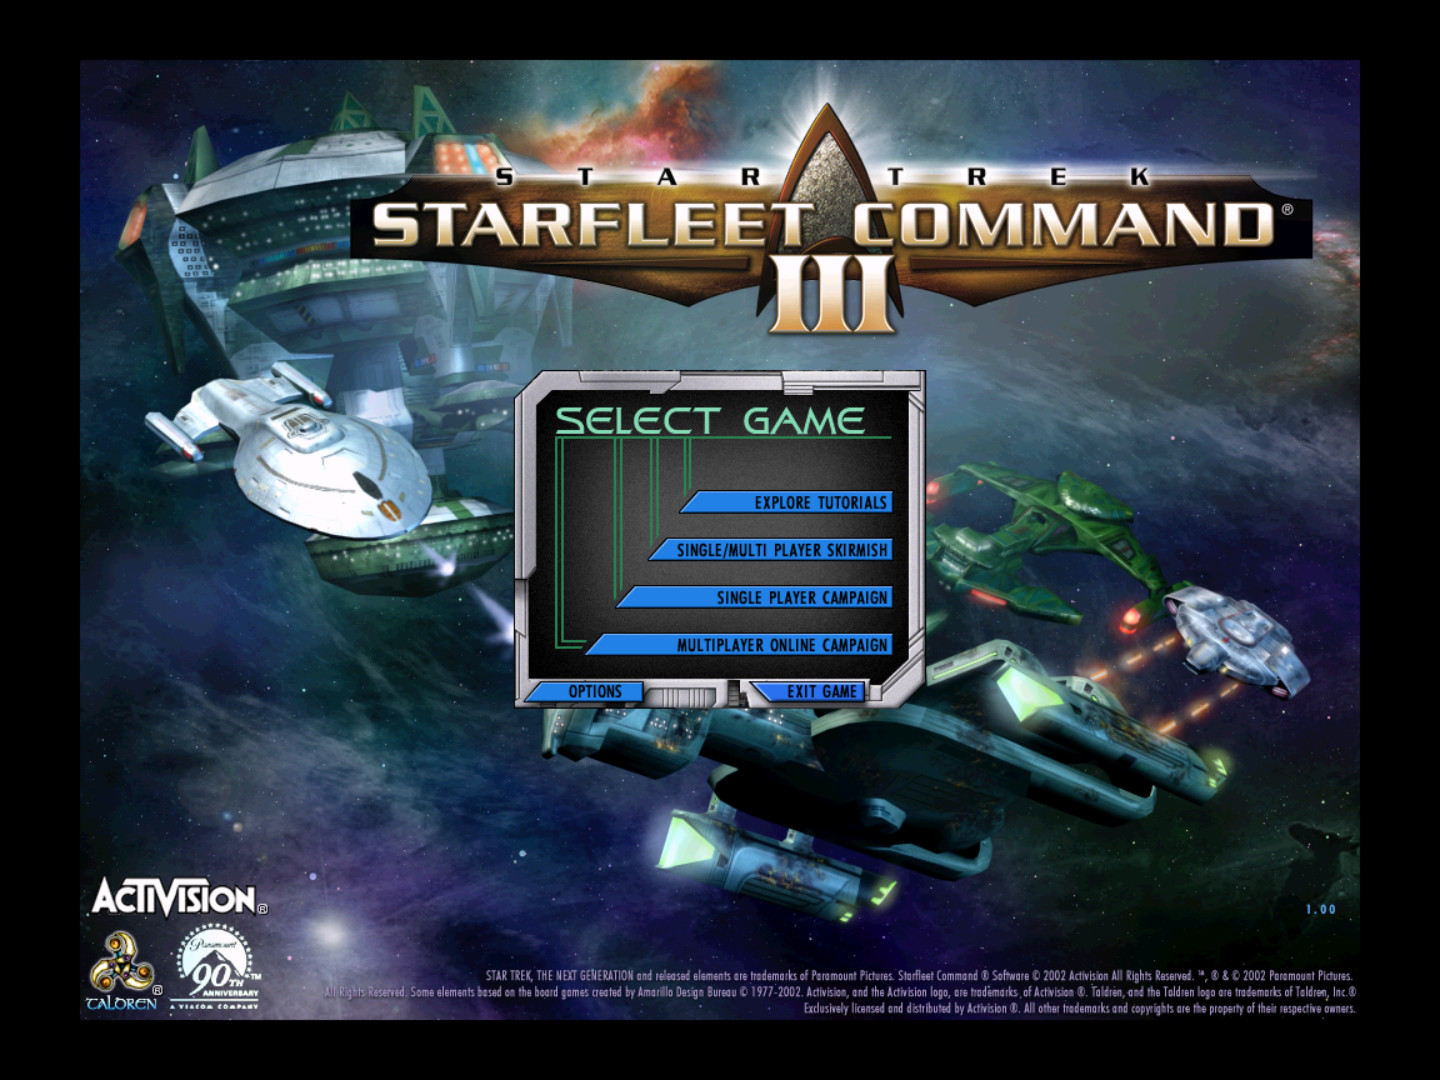 STAR TREK STARFLEET COMMAND III